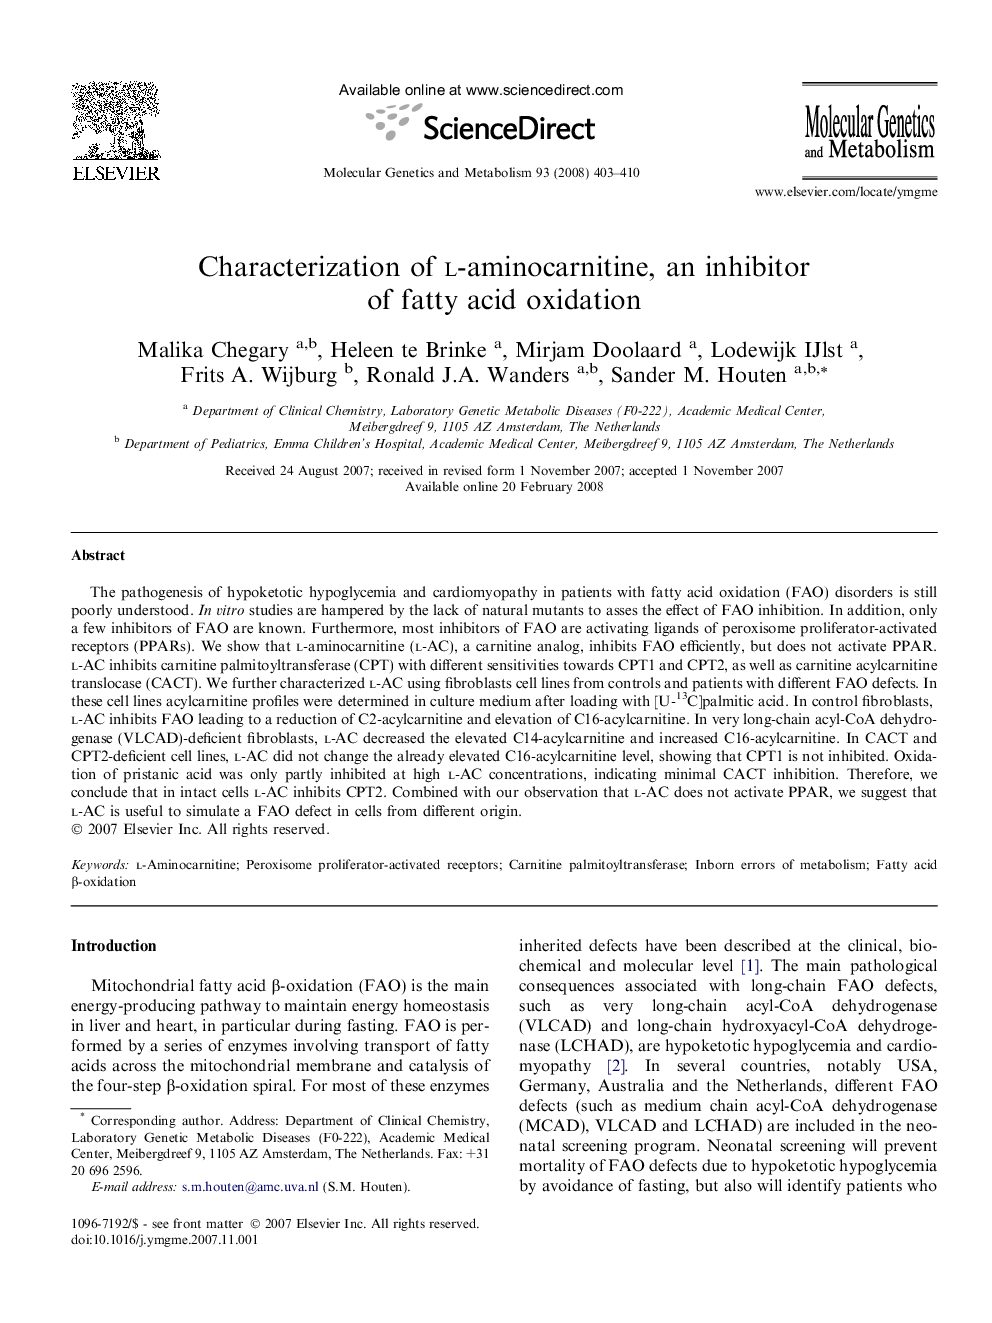 Characterization of l-aminocarnitine, an inhibitor of fatty acid oxidation